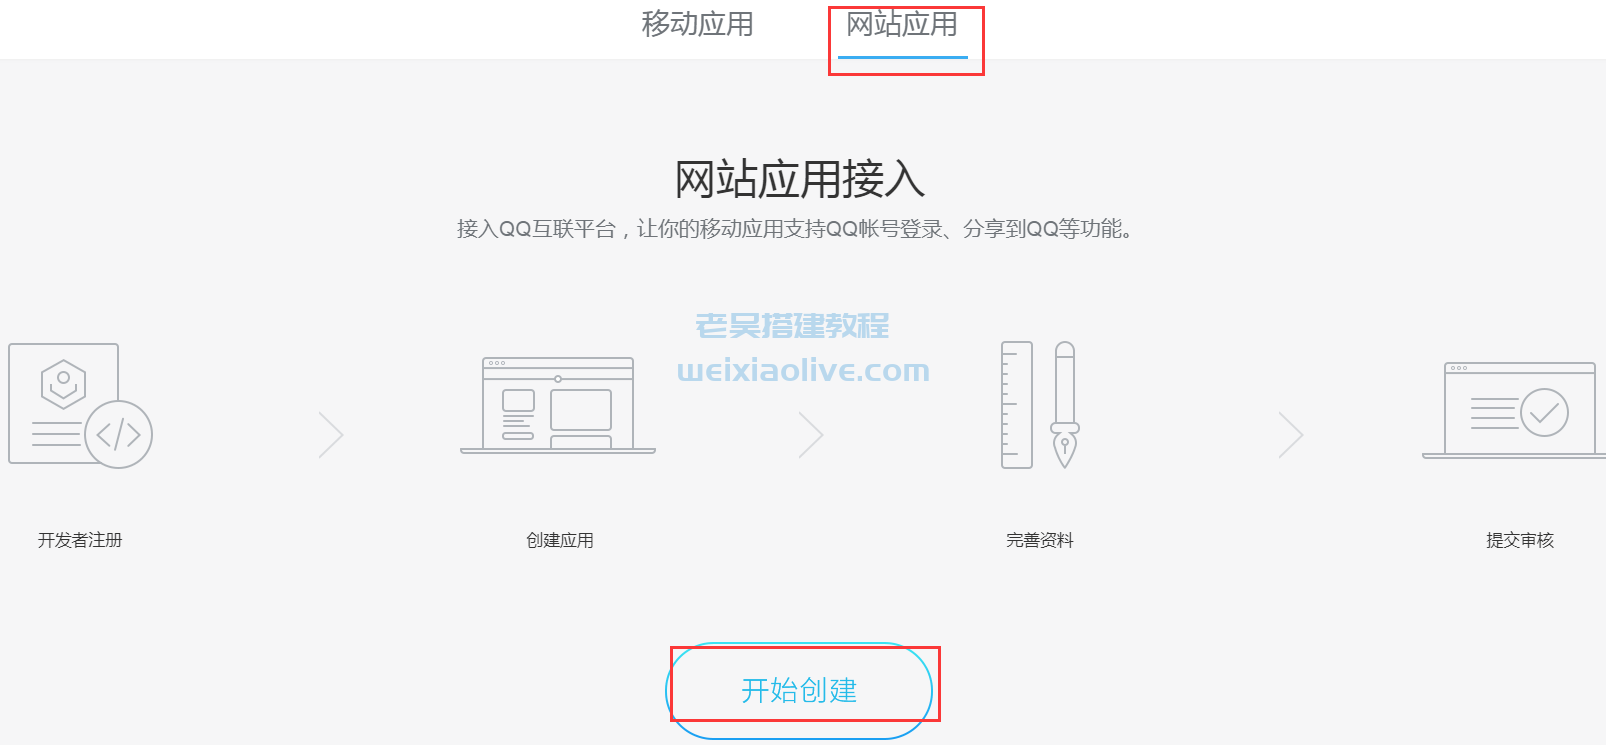 QQ快捷登录接口申请及后台配置教程